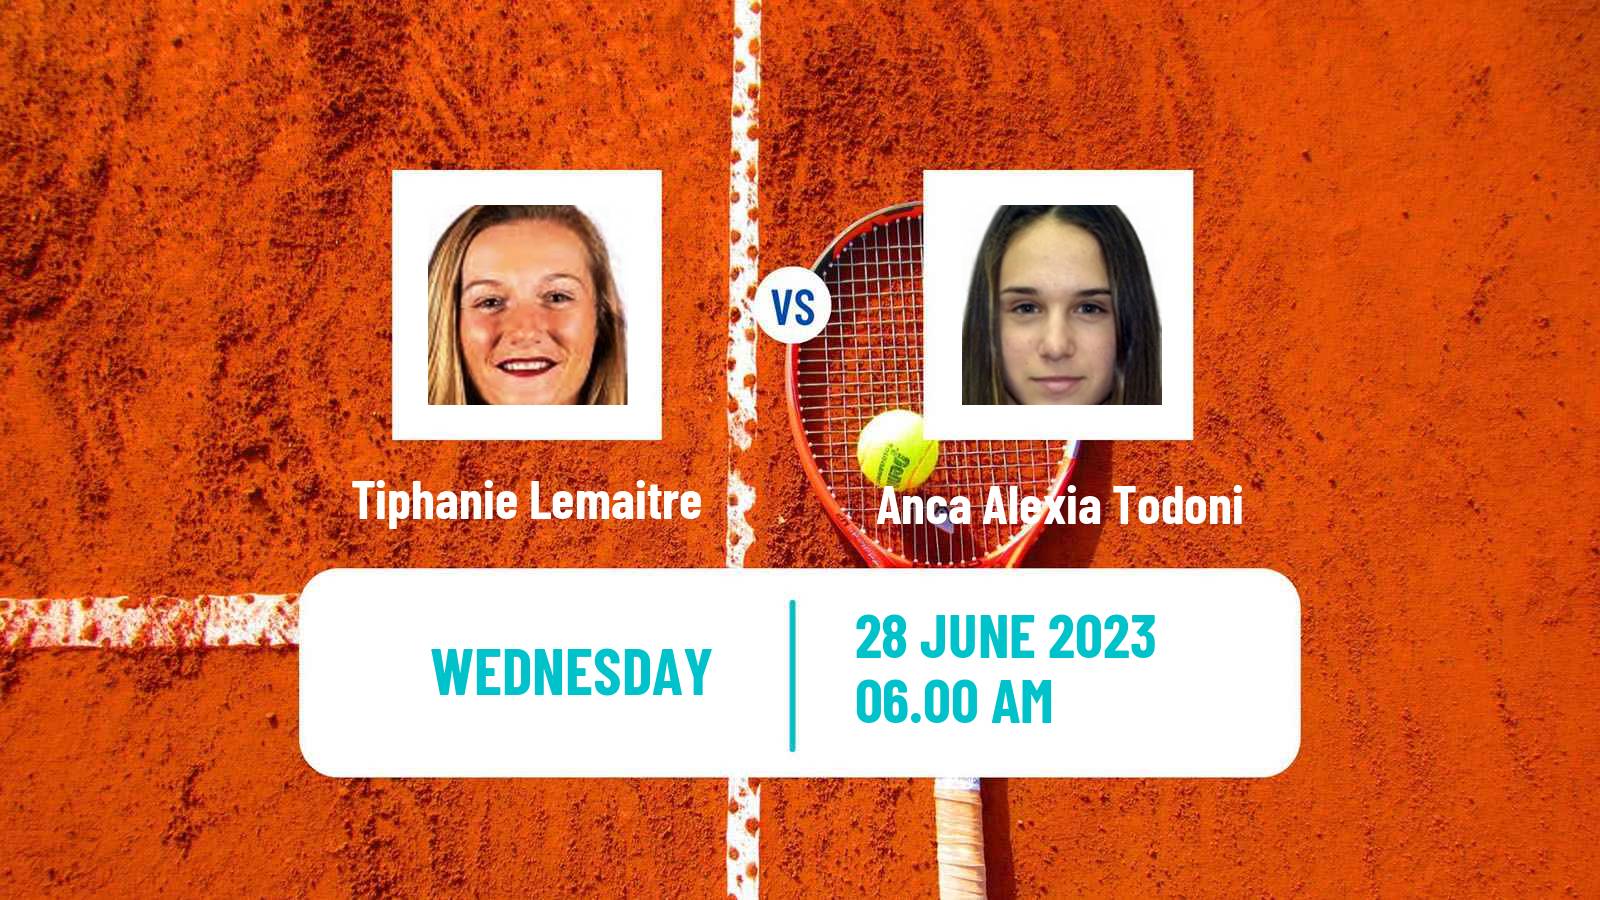 Tennis ITF W25 Prokuplje Women Tiphanie Lemaitre - Anca Alexia Todoni